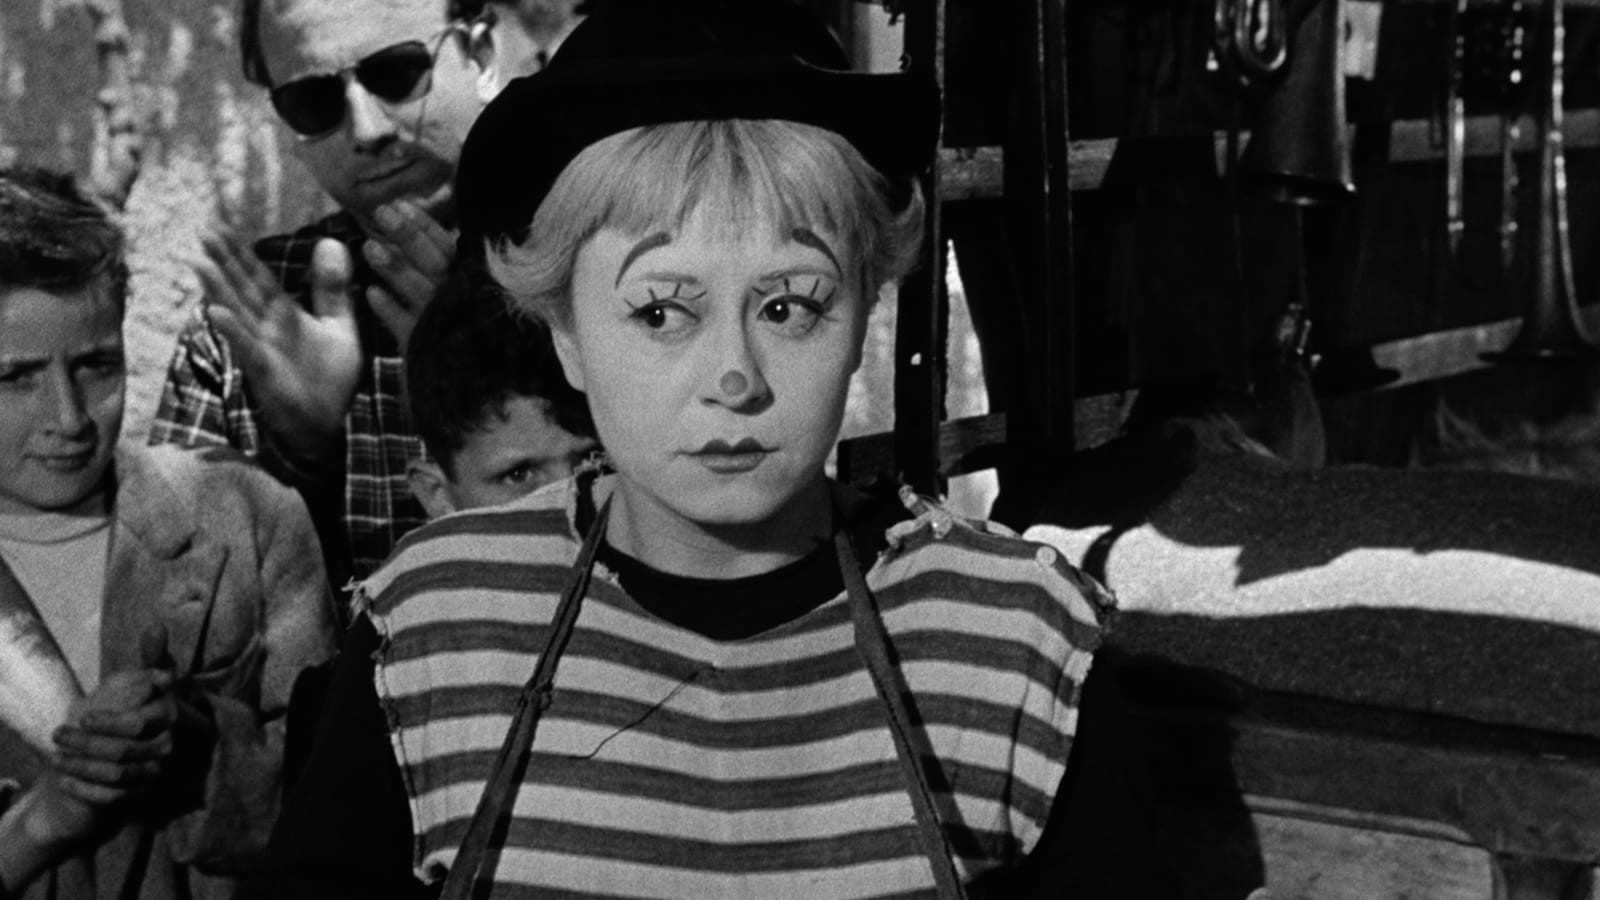 La Strada (The Road). 1954. Directed by Federico Fellini